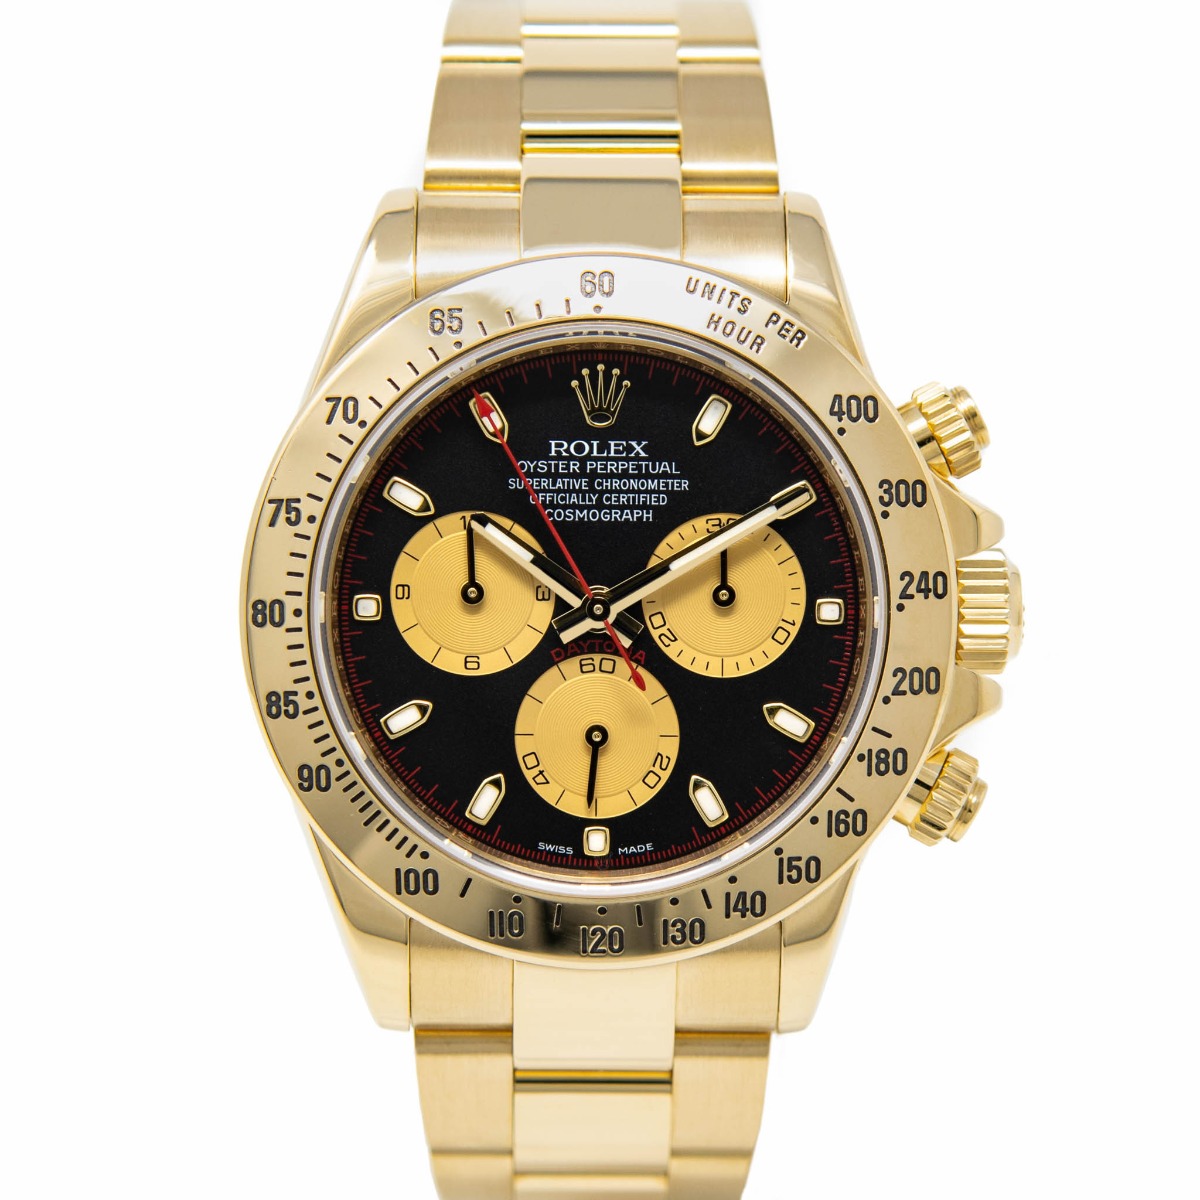 Rolex Cosmograph Daytona Yellow Gold 116528 Wristwatch - Black ...